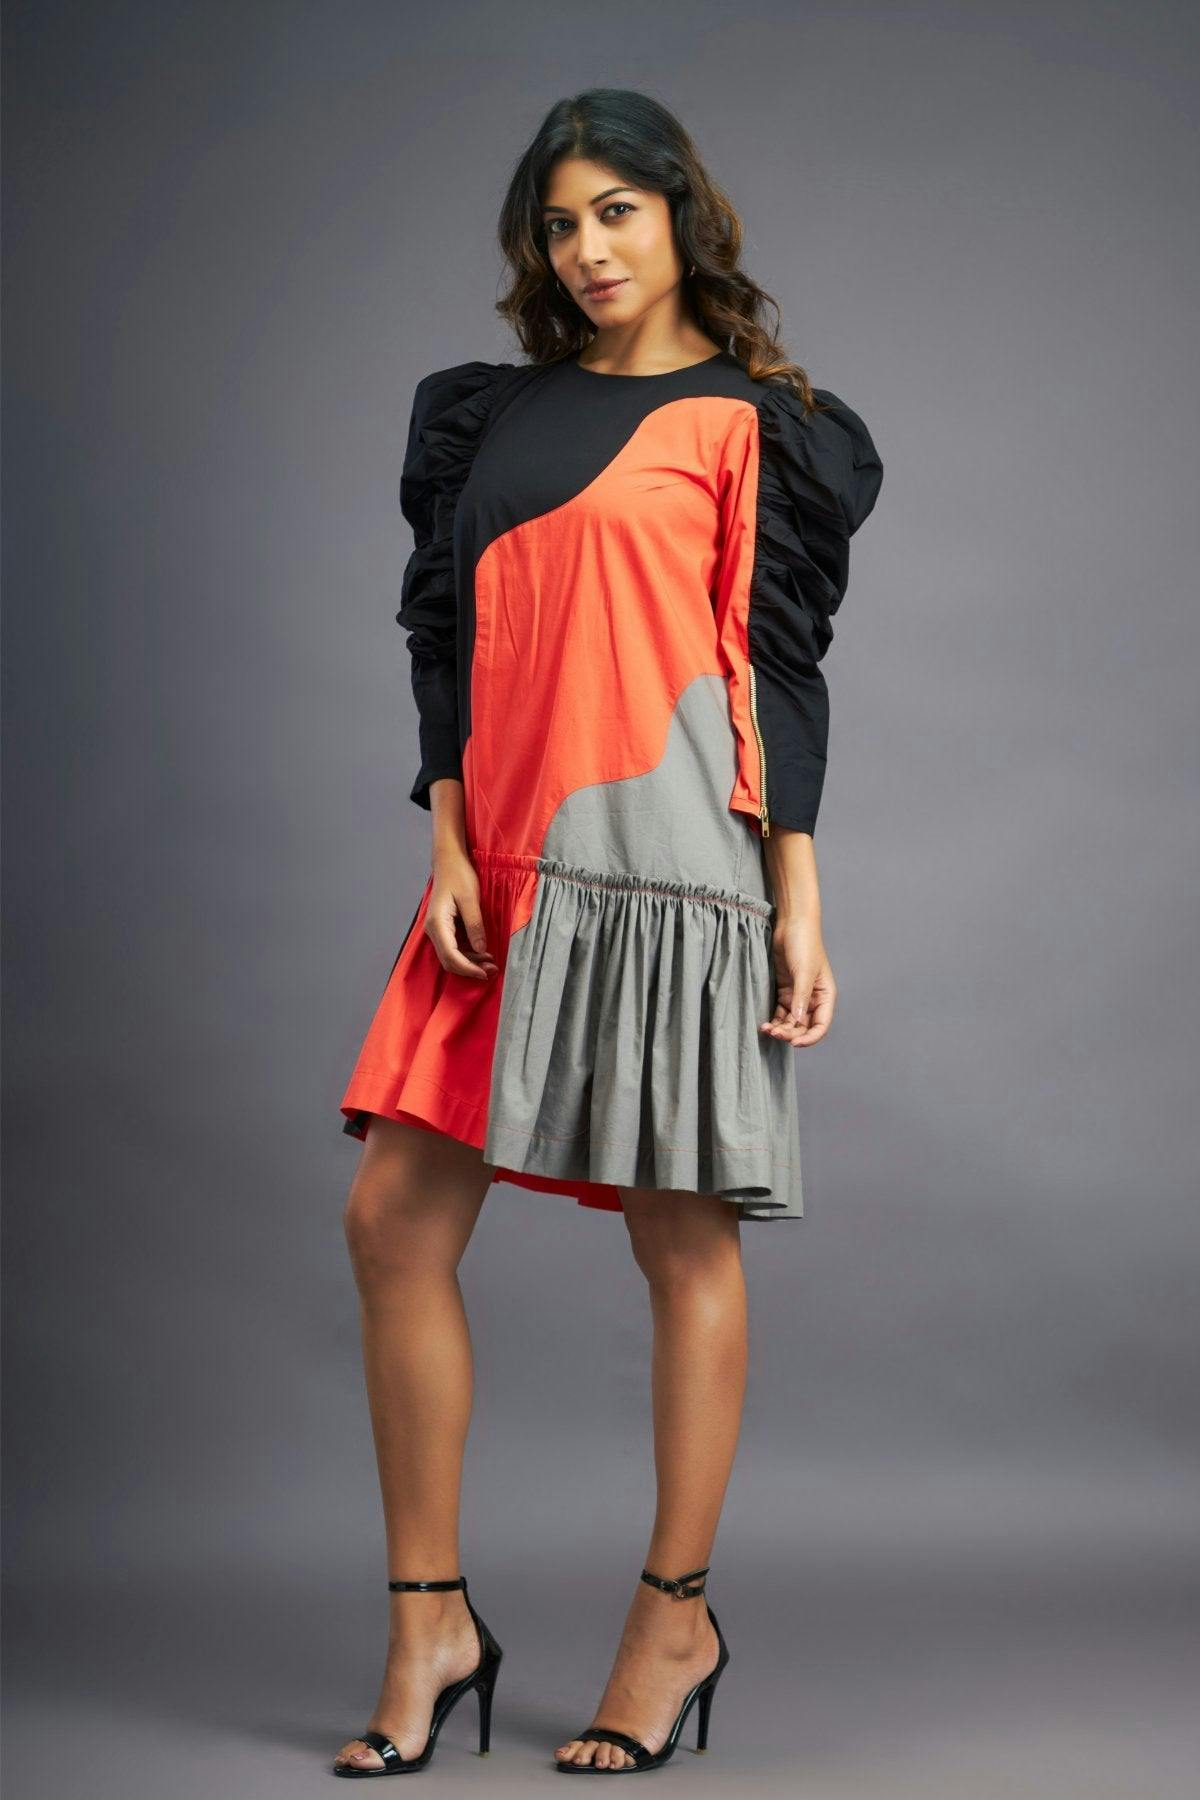 Thumbnail preview #4 for BB-1104-OG - Black Orange Short Dress With Frills